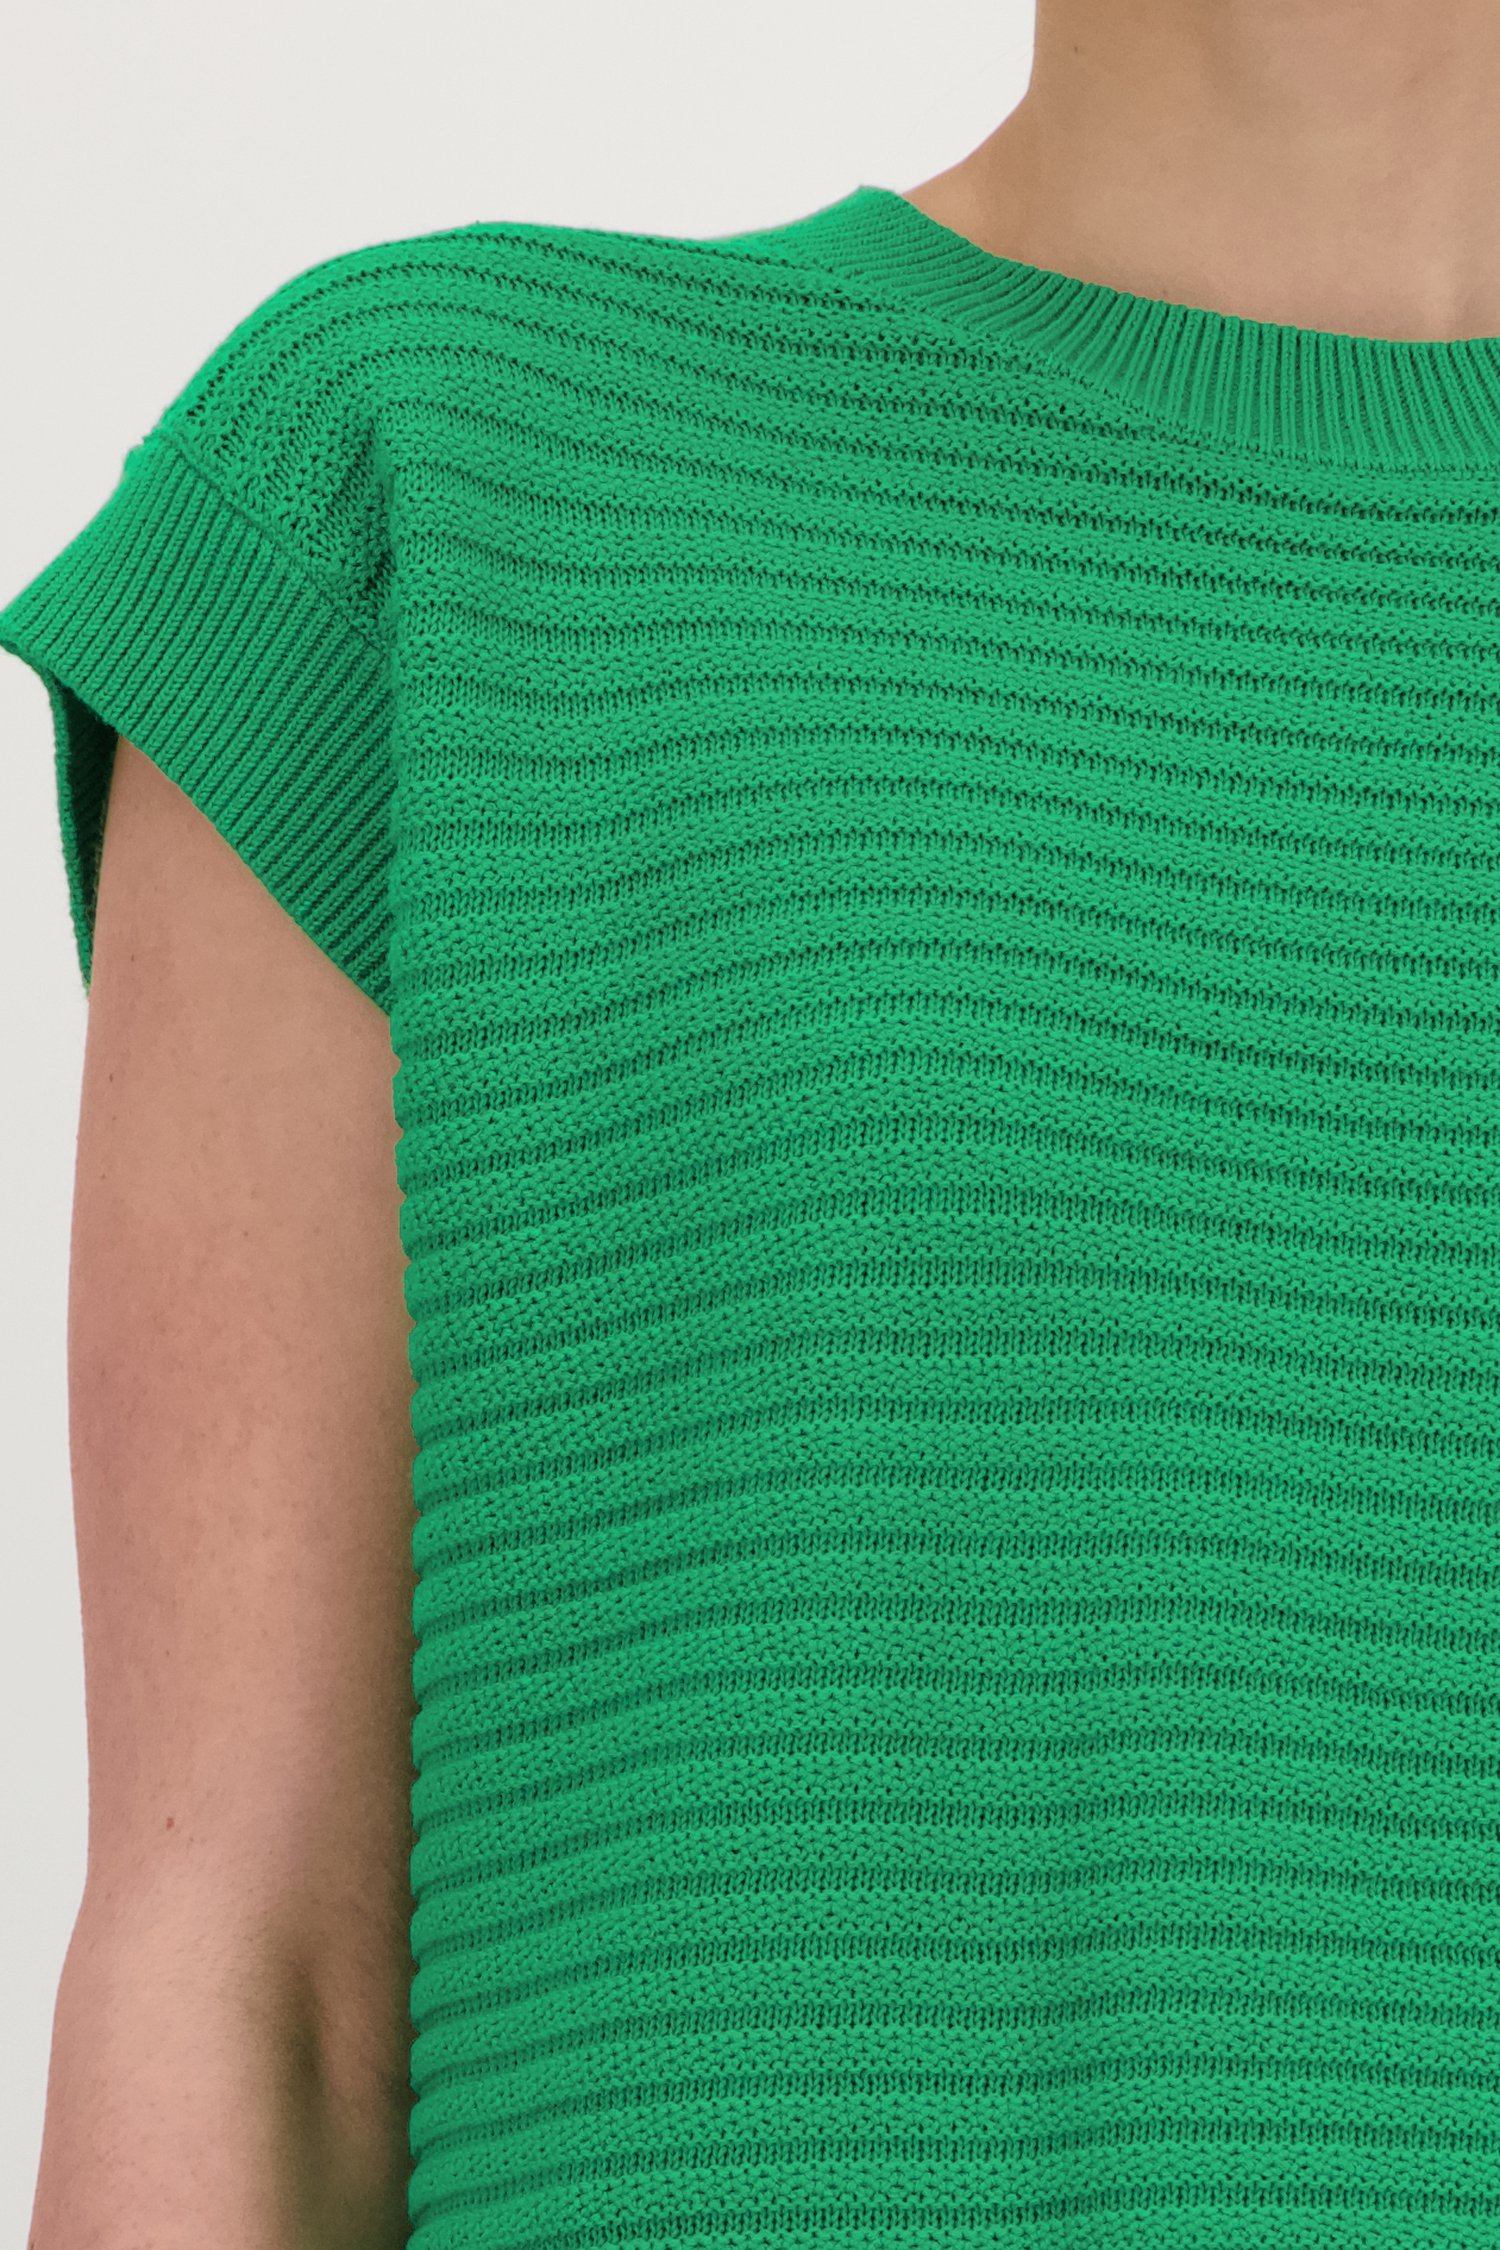 Pull en jersey sans manches vert de Liberty Island pour Femmes